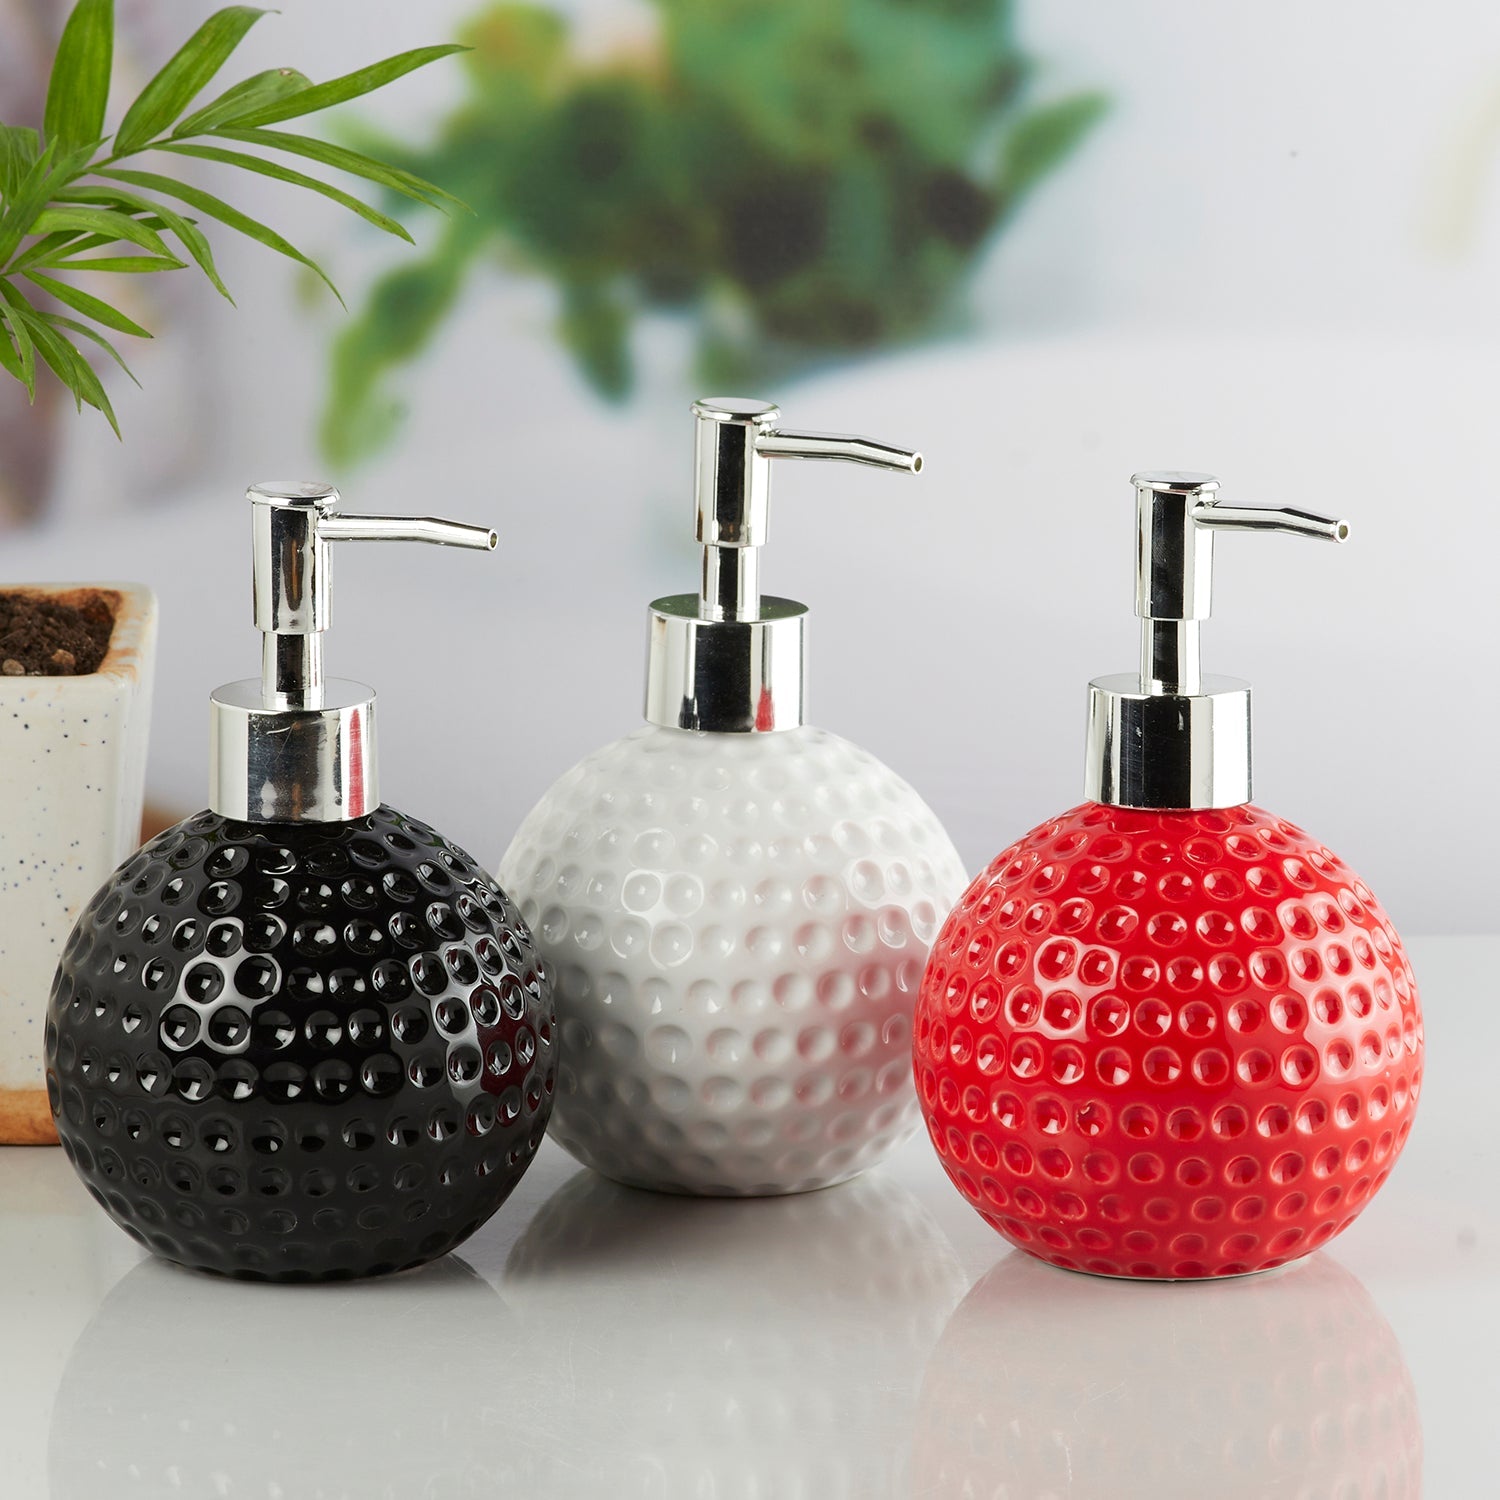 Ceramic Soap Dispenser handwash Pump for Bathroom, Set of 1, Red (8652)